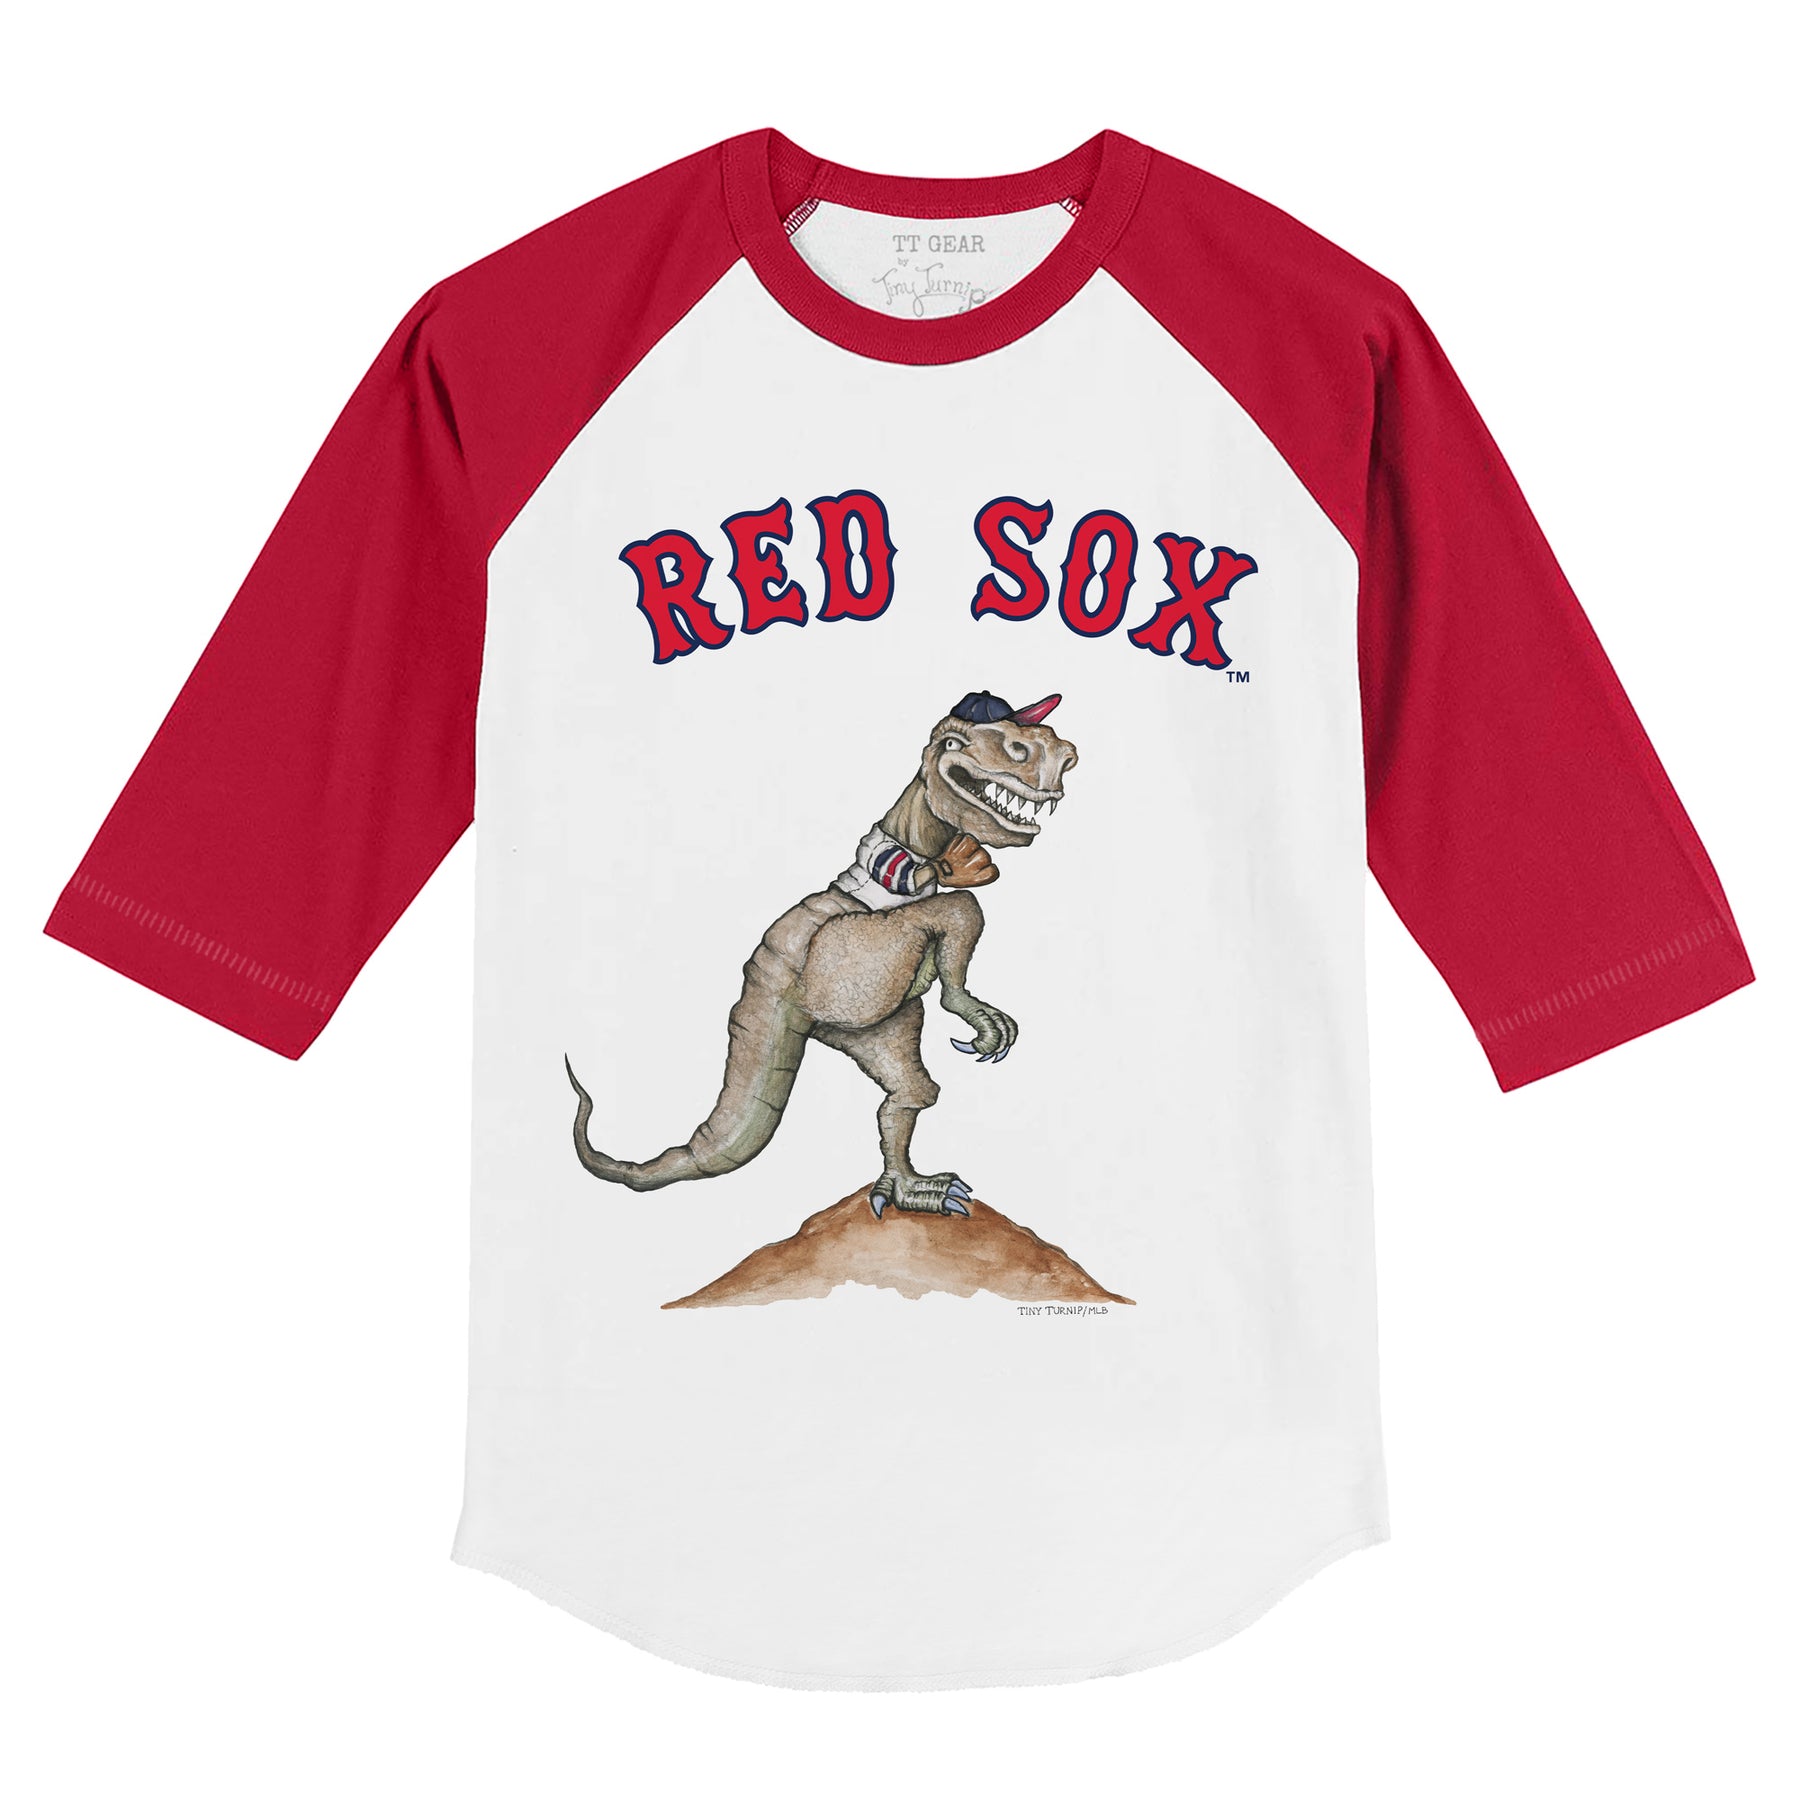 Boston Red Sox TT Rex 3/4 Red Sleeve Raglan